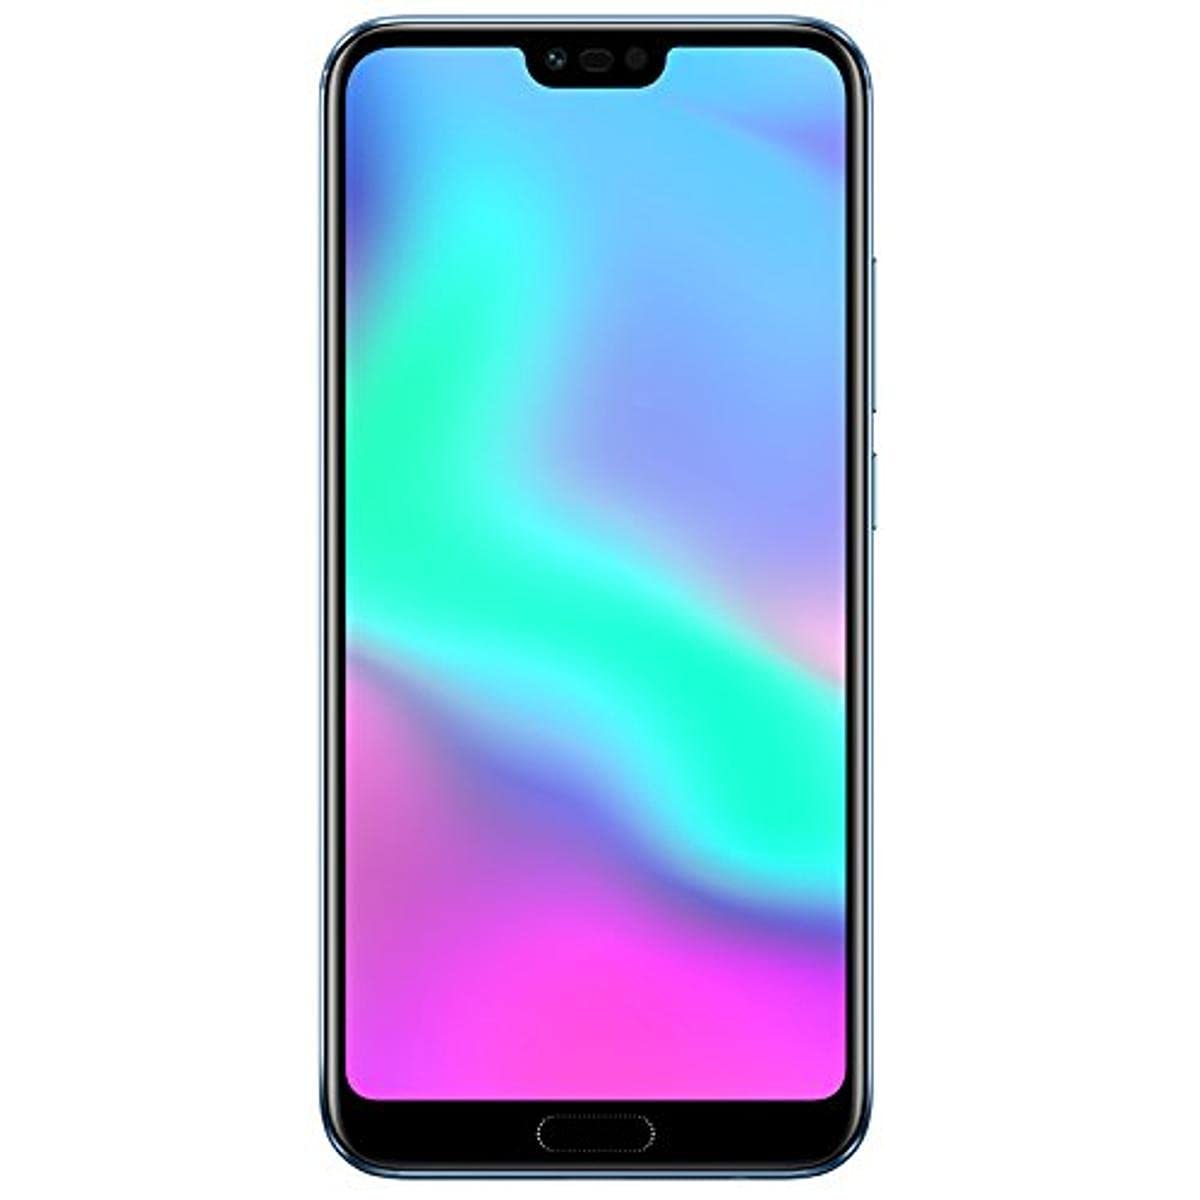 Huawei Honor 10 Dual-SIM 128GB (GSM Only, No CDMA) Factory Unlocked 4G Smartphone (Glacier Grey) - International Version